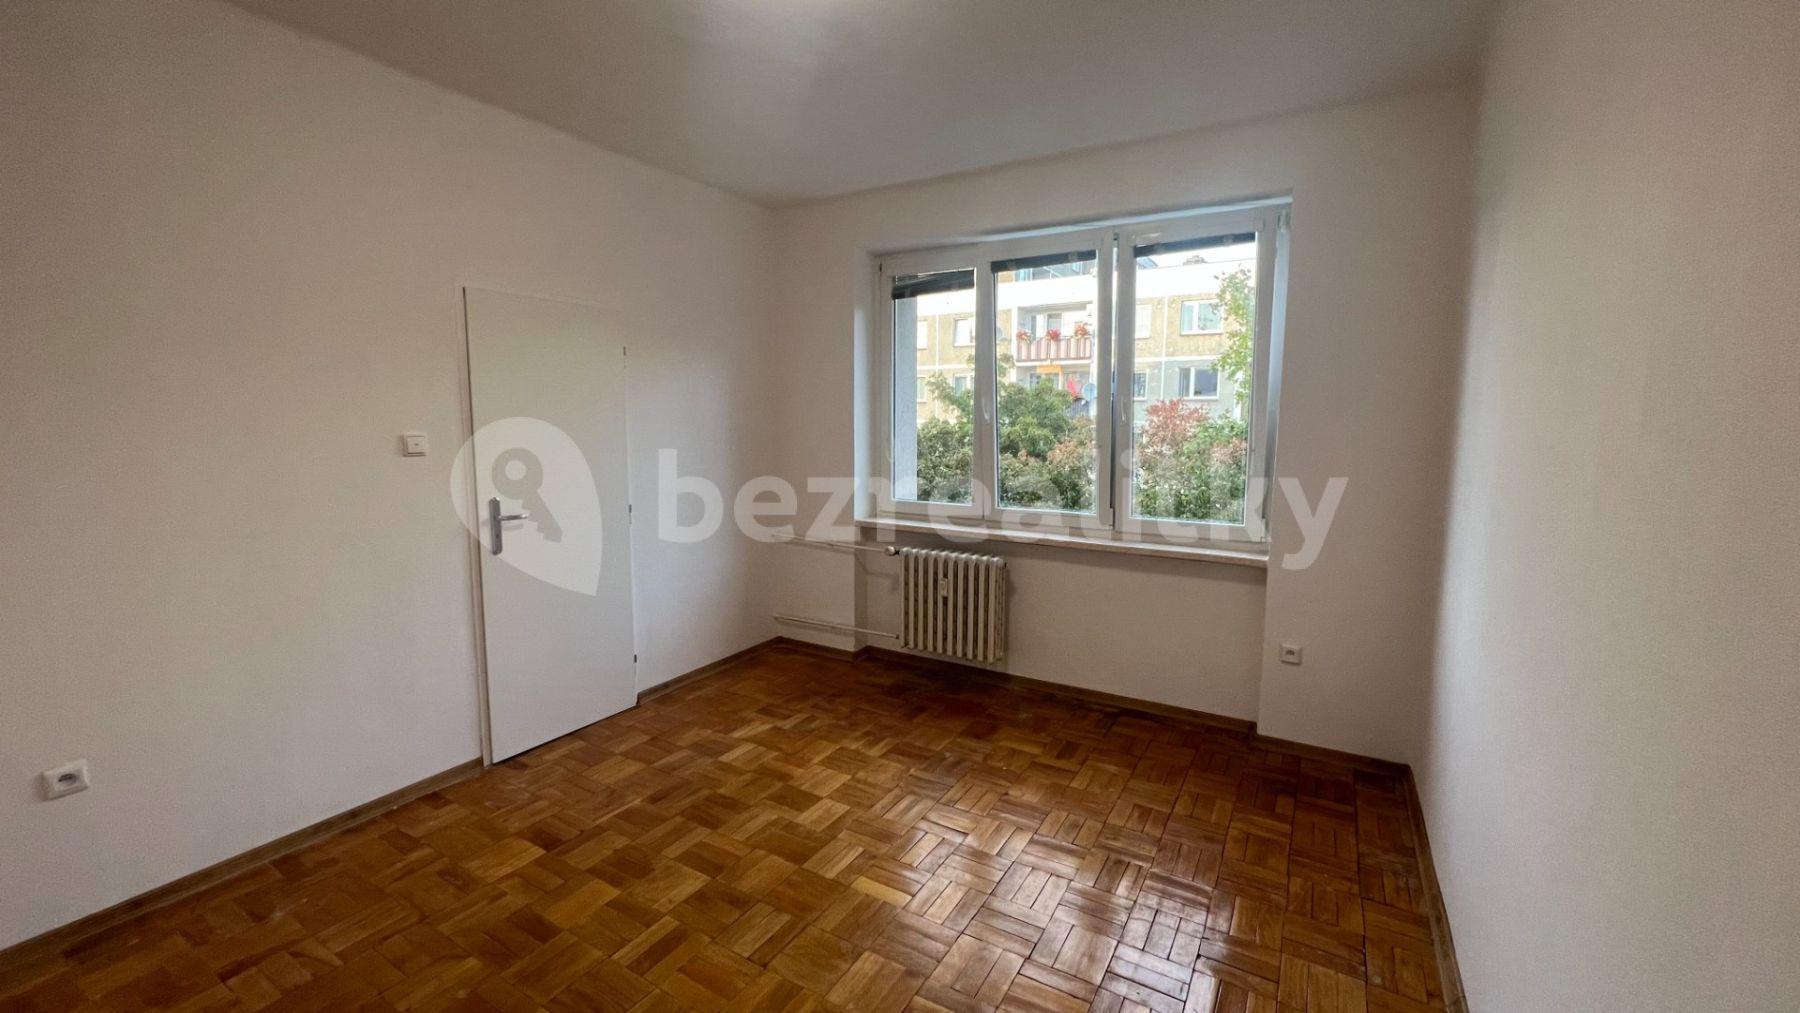 1 bedroom flat to rent, 30 m², Masarykova, Ústí nad Labem, Ústecký Region